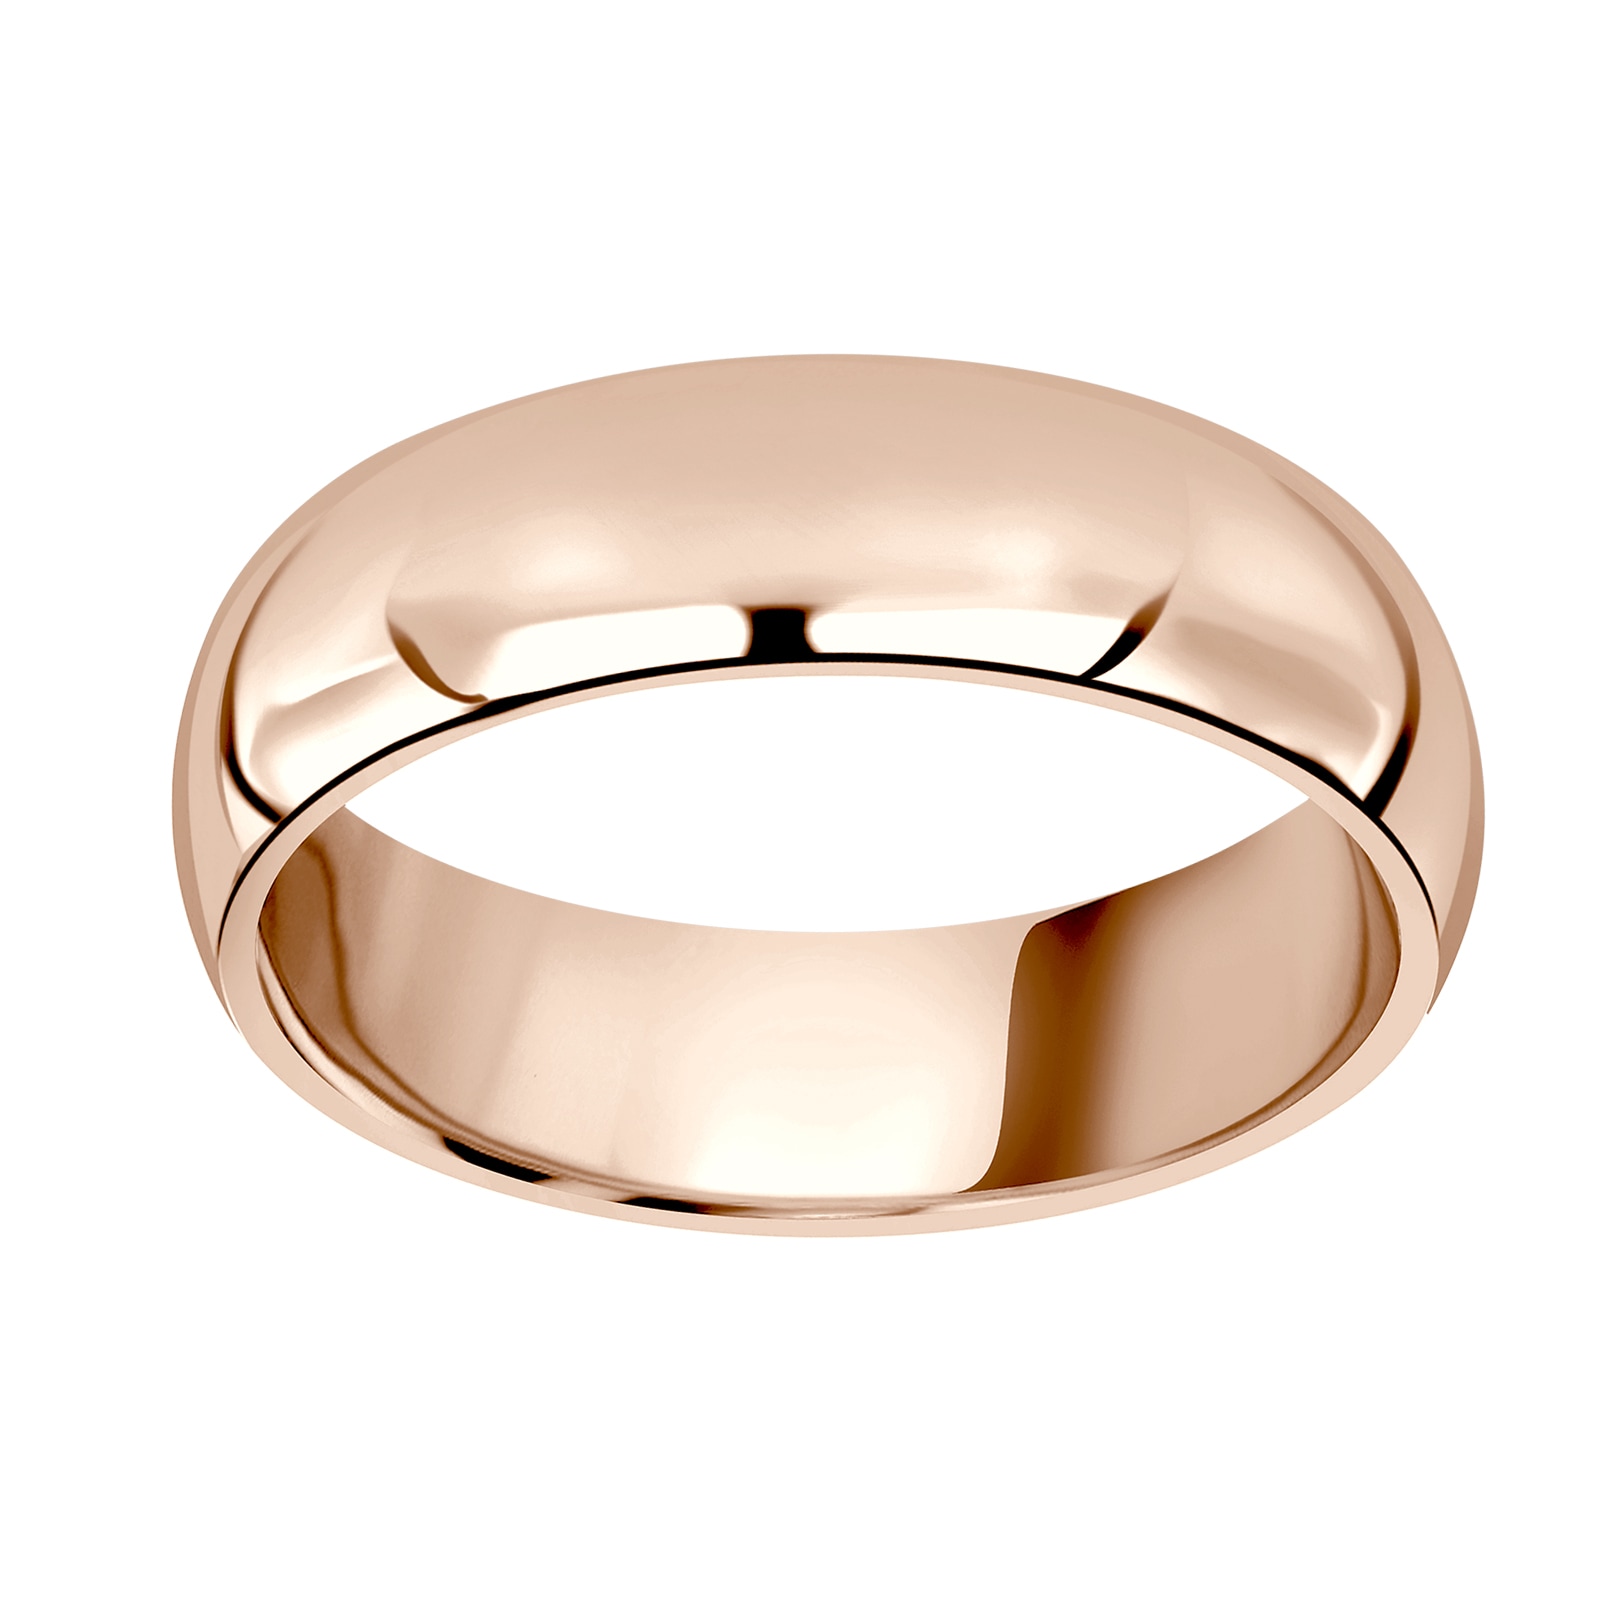 Splendor | 18ct Rose Gold pavé style engagement ring | Jewelry rings  engagement, Round diamond engagement rings, Yellow gold engagement rings